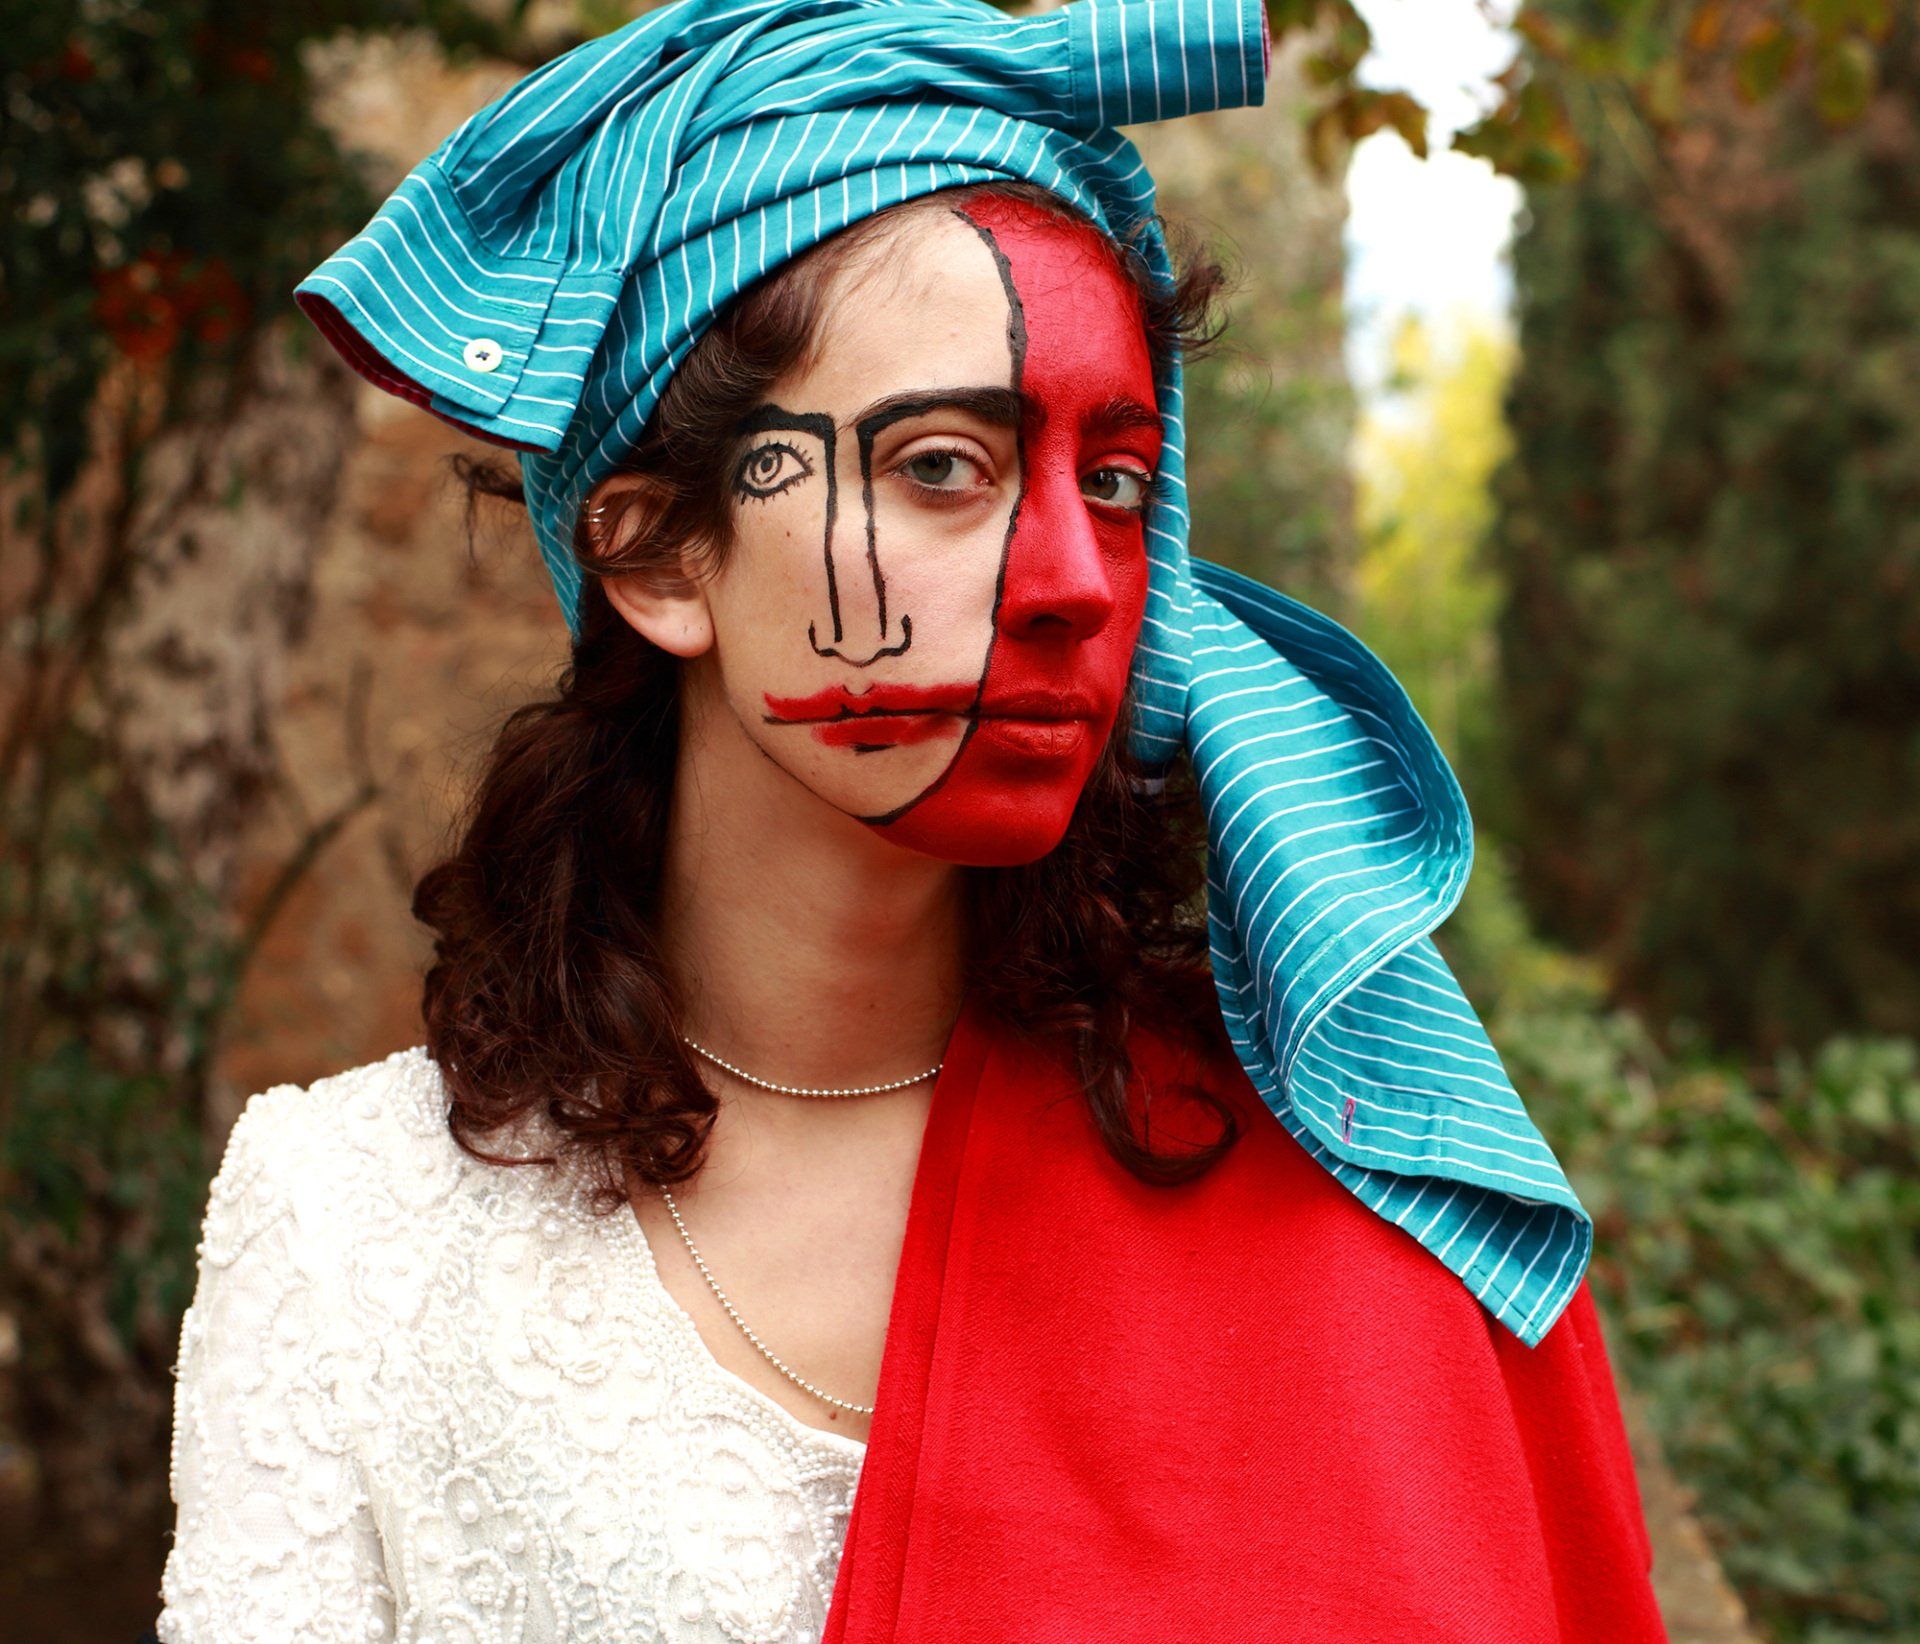 „Redface No. 5“ by Sebastian Bieniek (B1EN1EK), 2017, Rome (Italy). Model: Chiara di Carmine. Edition of 9 original photographs. 67 cm. x 78 cm. From the „Redface“ series. Oeuvre of Bieniek-Face (BieniekFace).